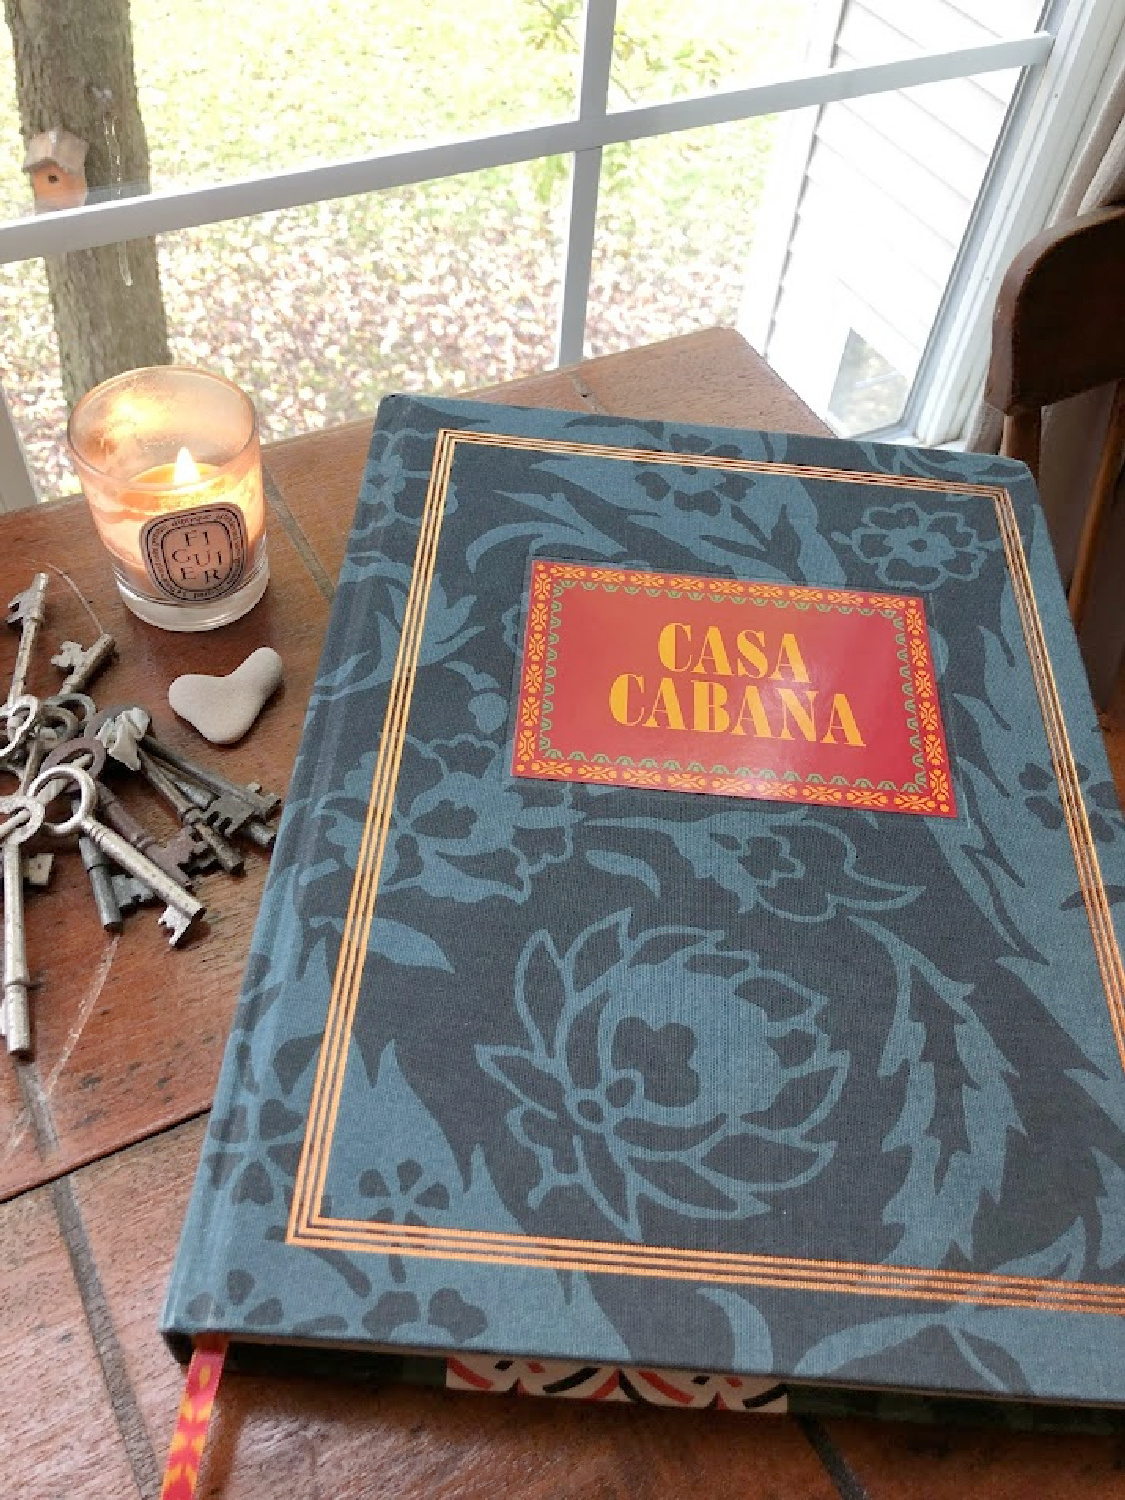 CASA CABANA by Martina Mondadori on my desk with candle and keys - Hello Lovely Studio.